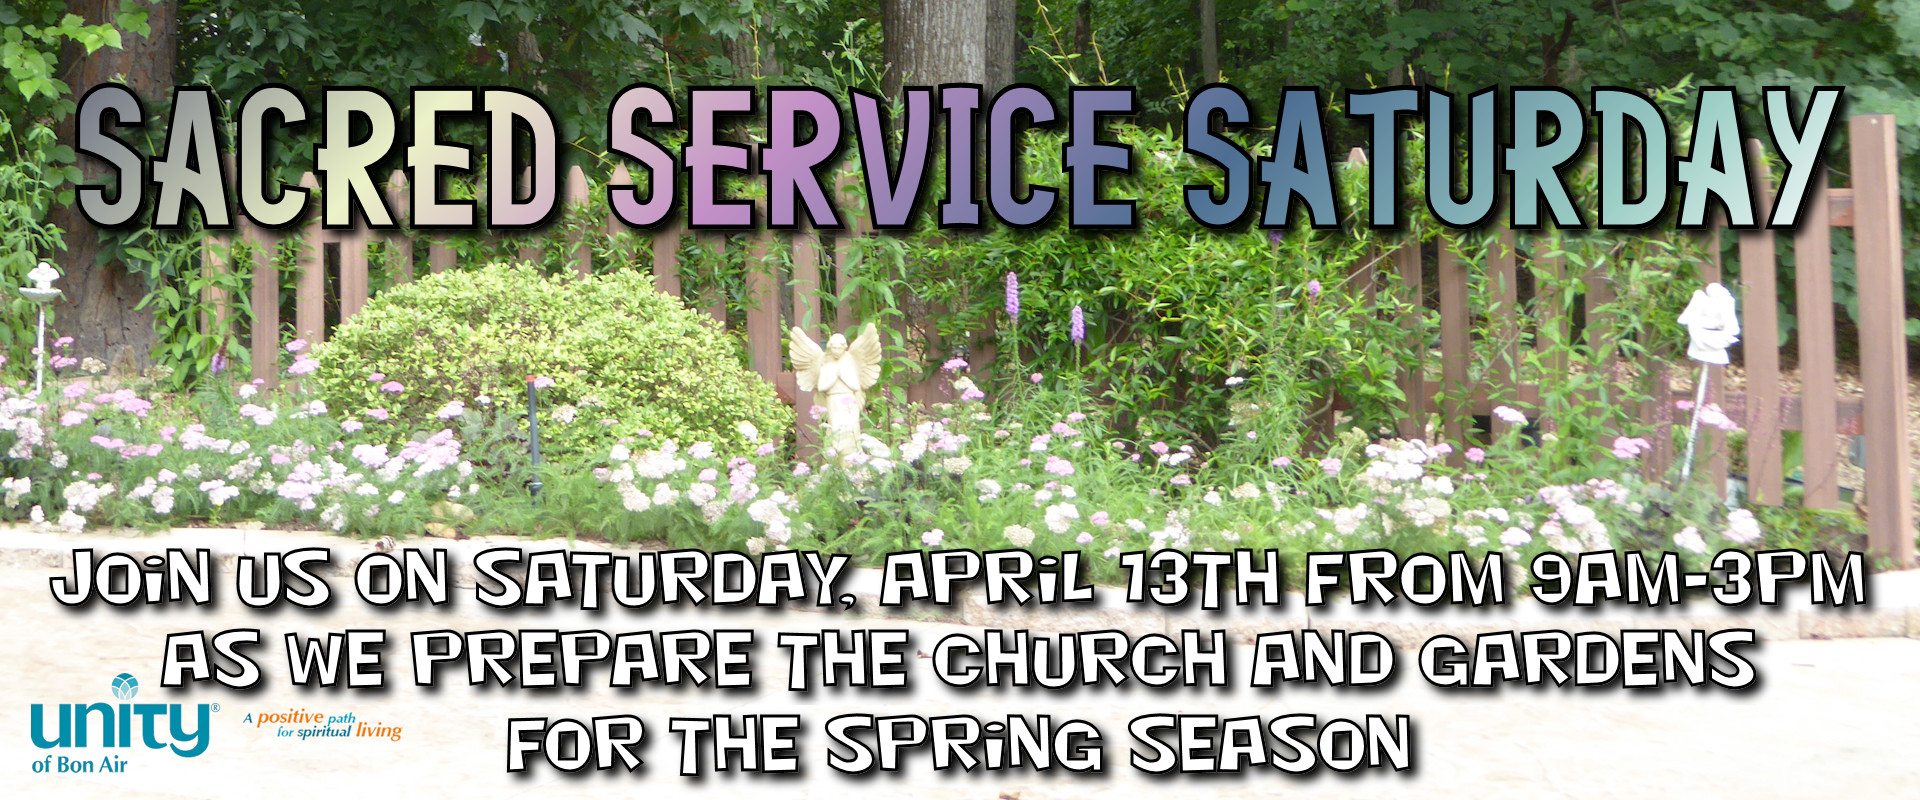 Sacred Service Saturday